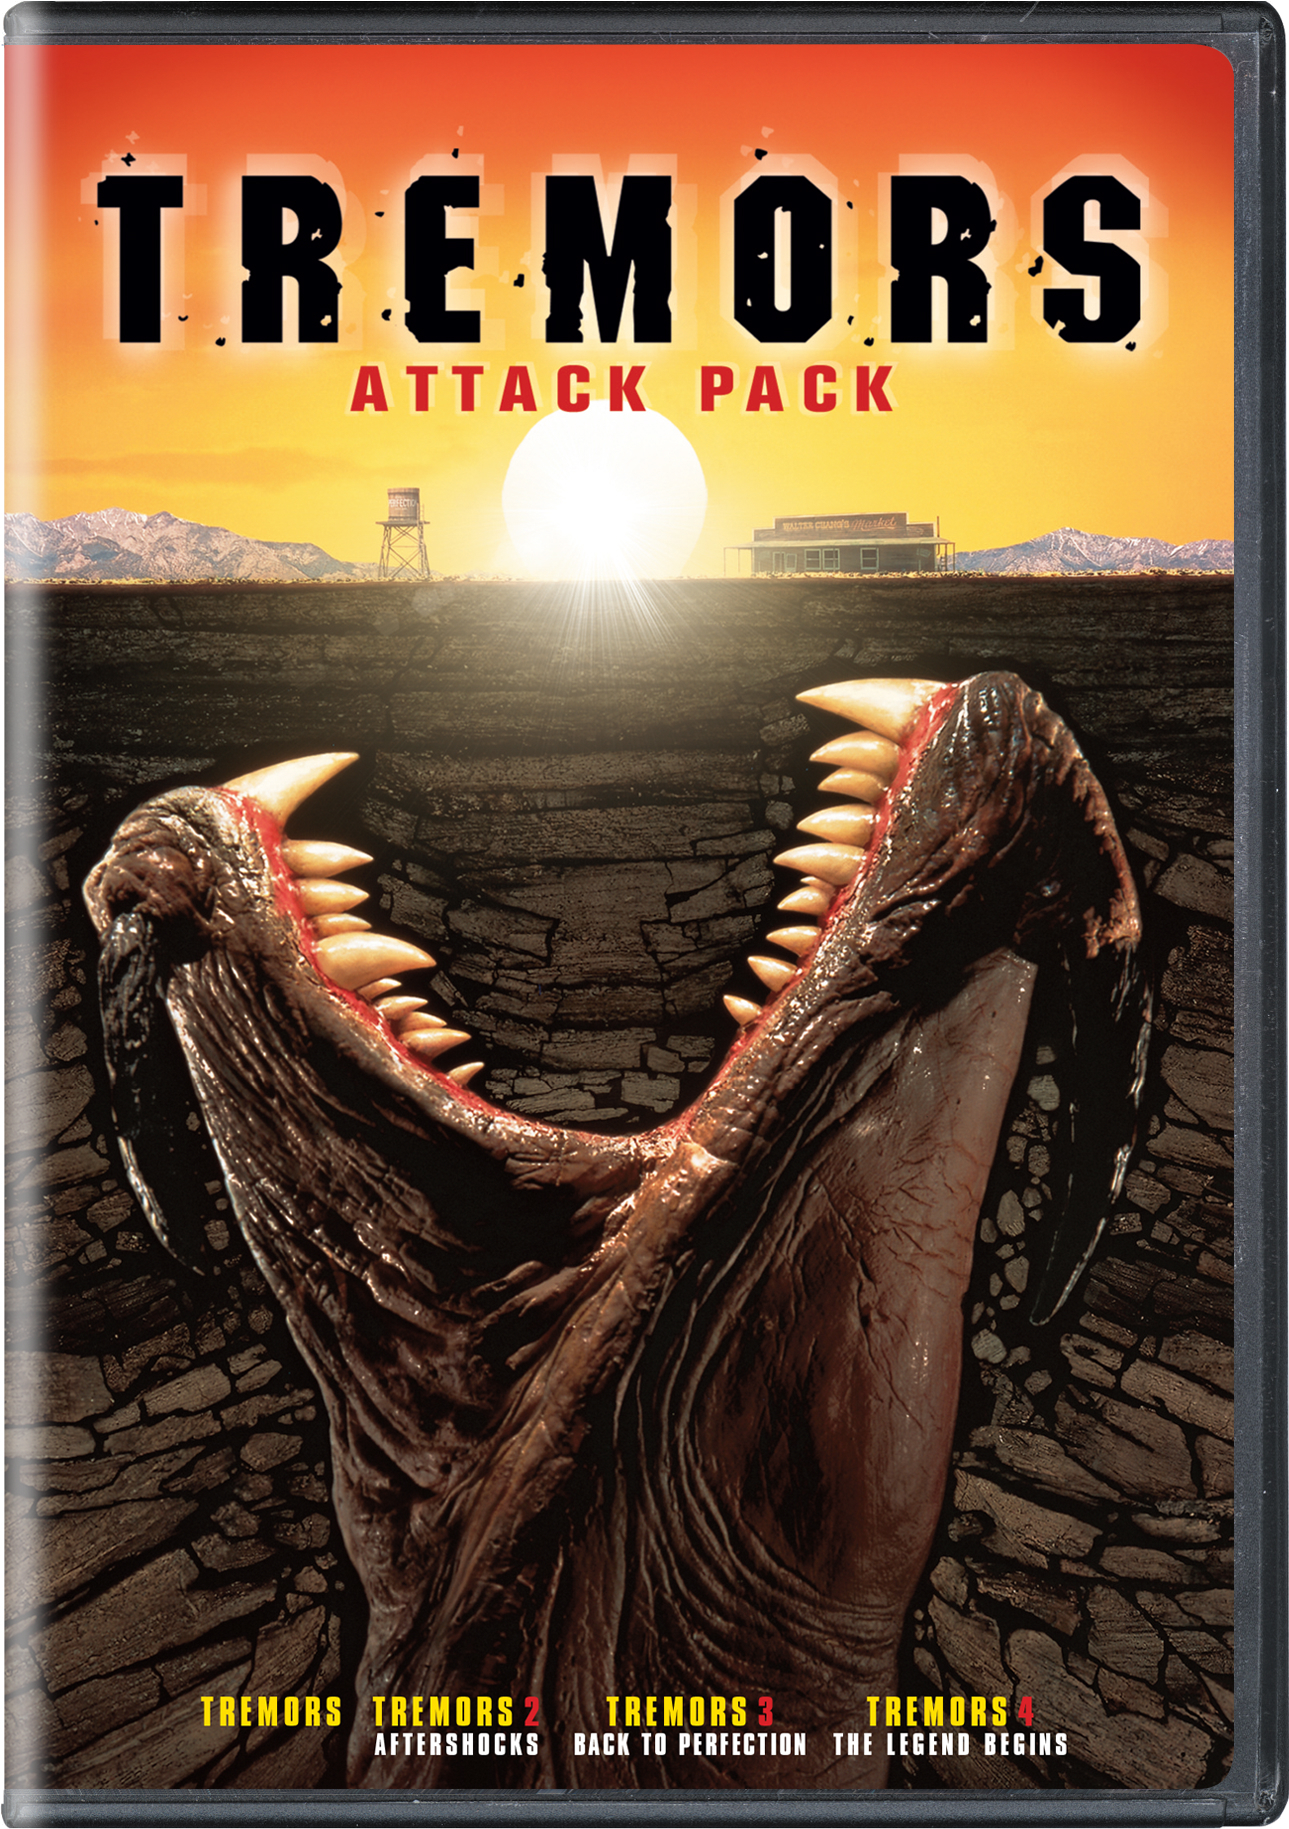 Tremors: 1-4 (DVD Set) - DVD [ 2004 ]  - Horror Movies On DVD - Movies On GRUV